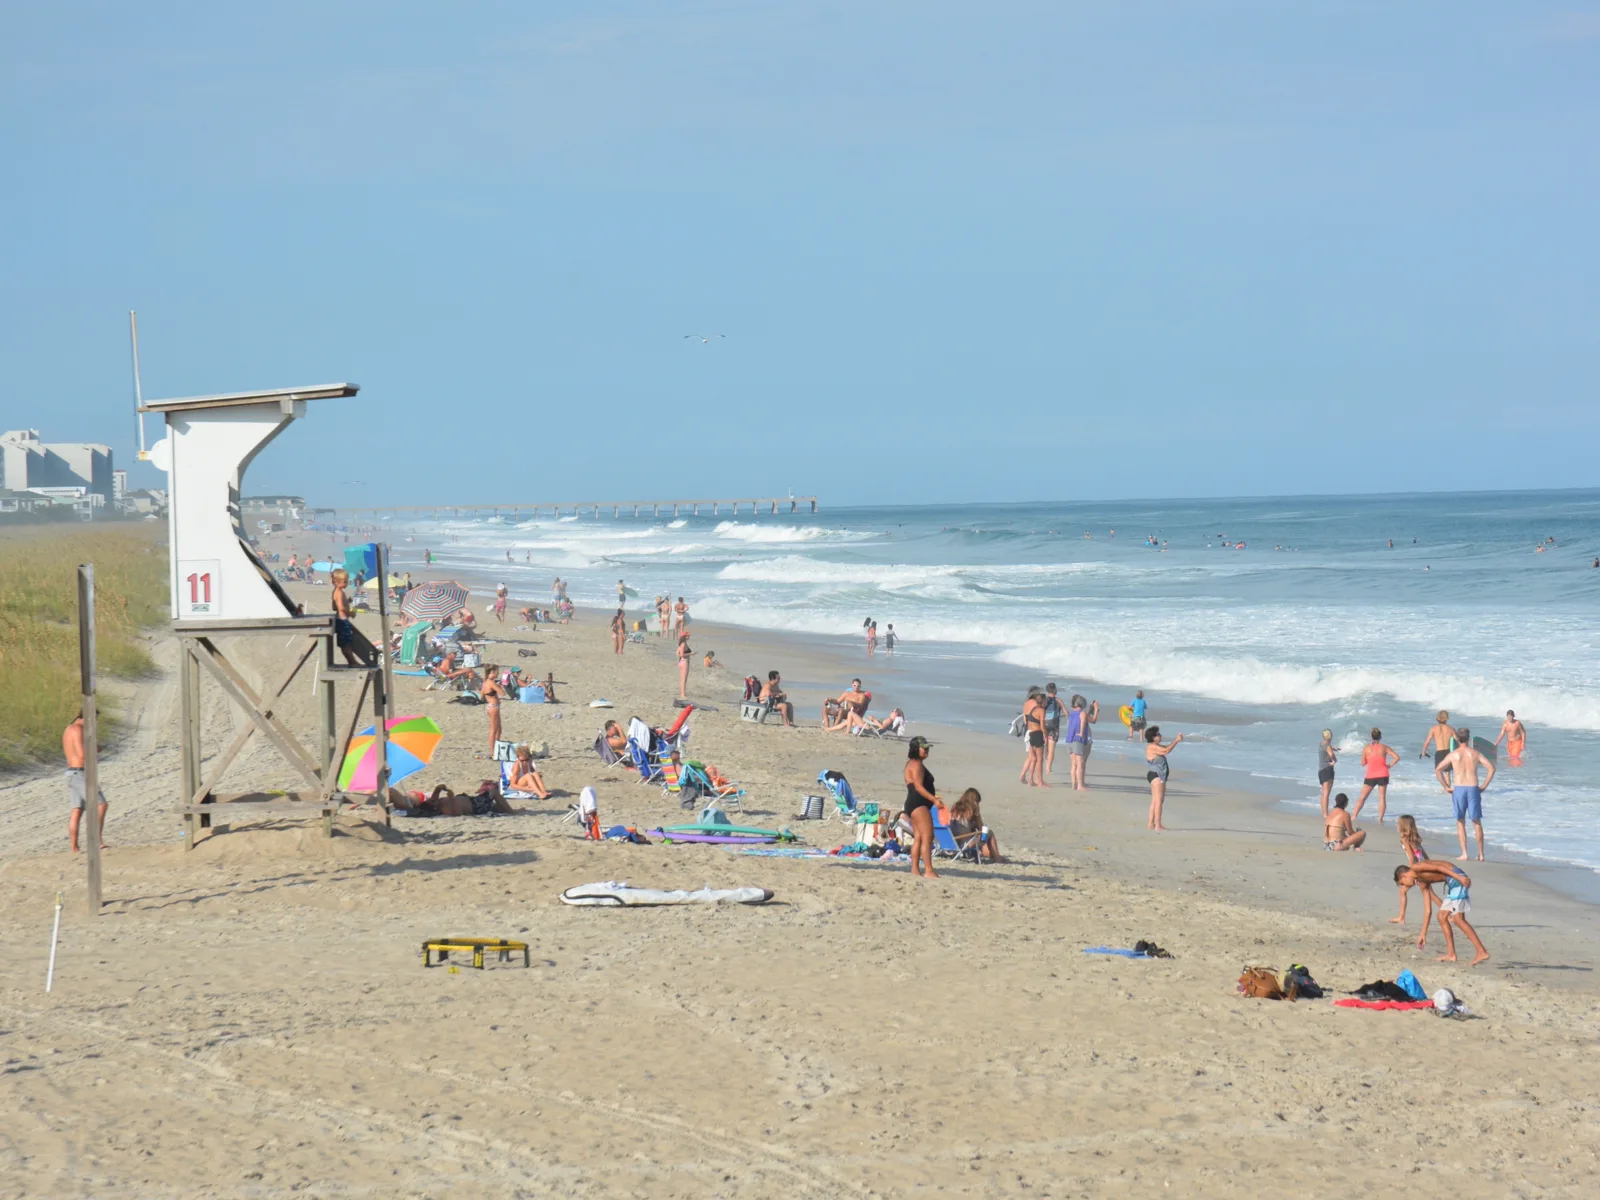 Many visitors enjoying the wavy summer day at Carolina Beach in North Carolina, one of the best beaches on the East Coast